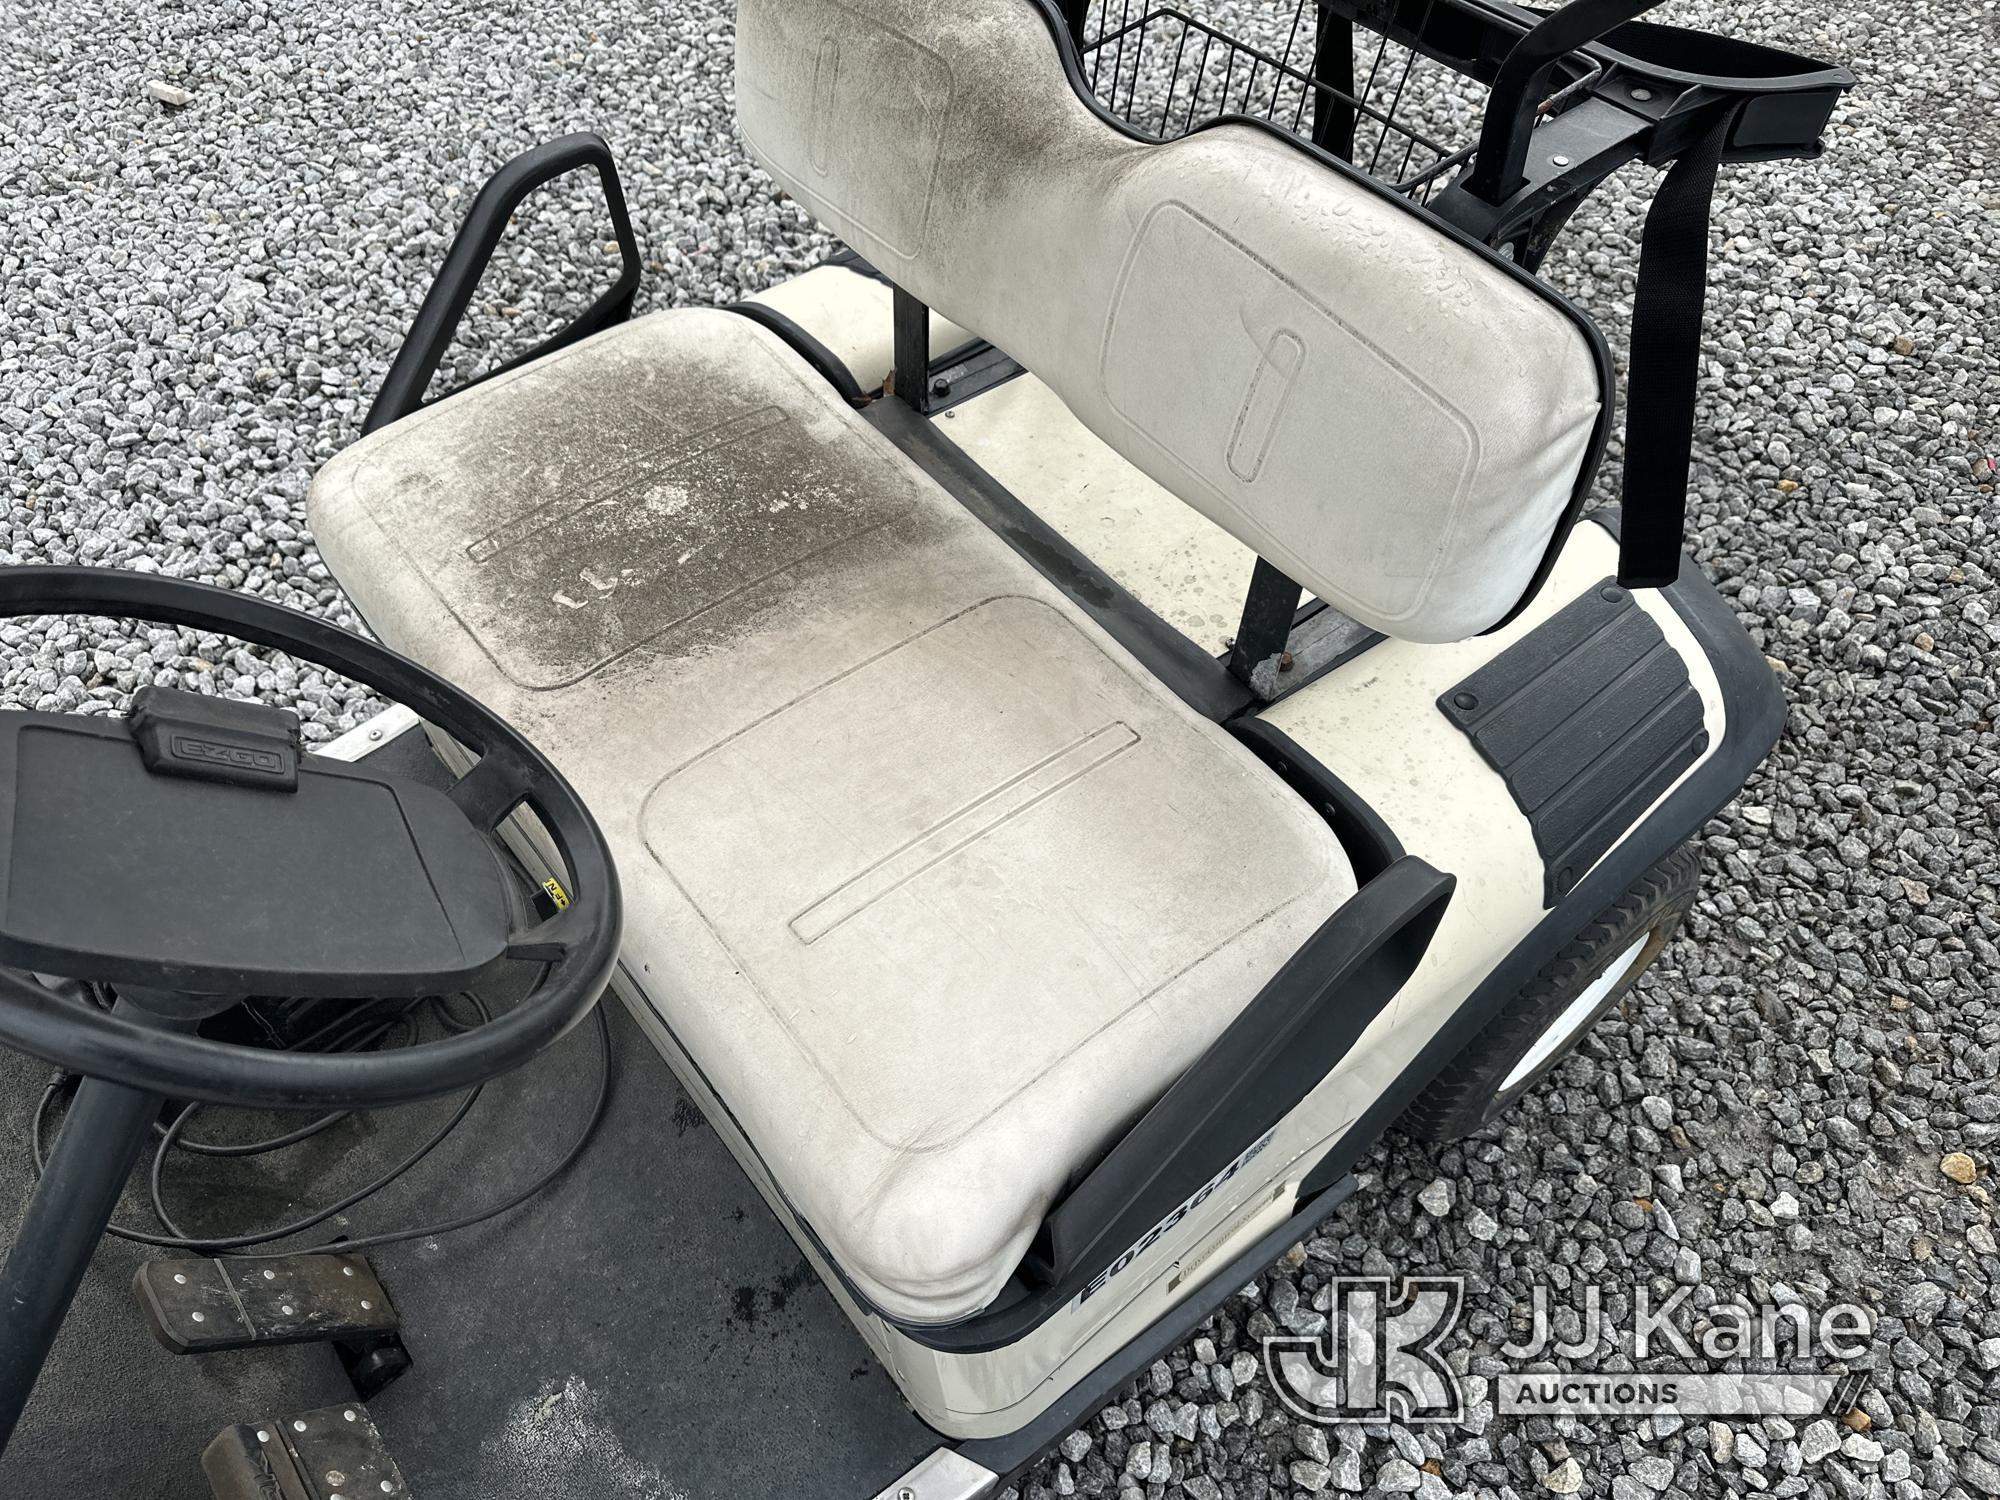 (Villa Rica, GA) EZGO Textron Golf Cart, (GA Power Unit) Not Running, Condition Unknown) (Charger Co